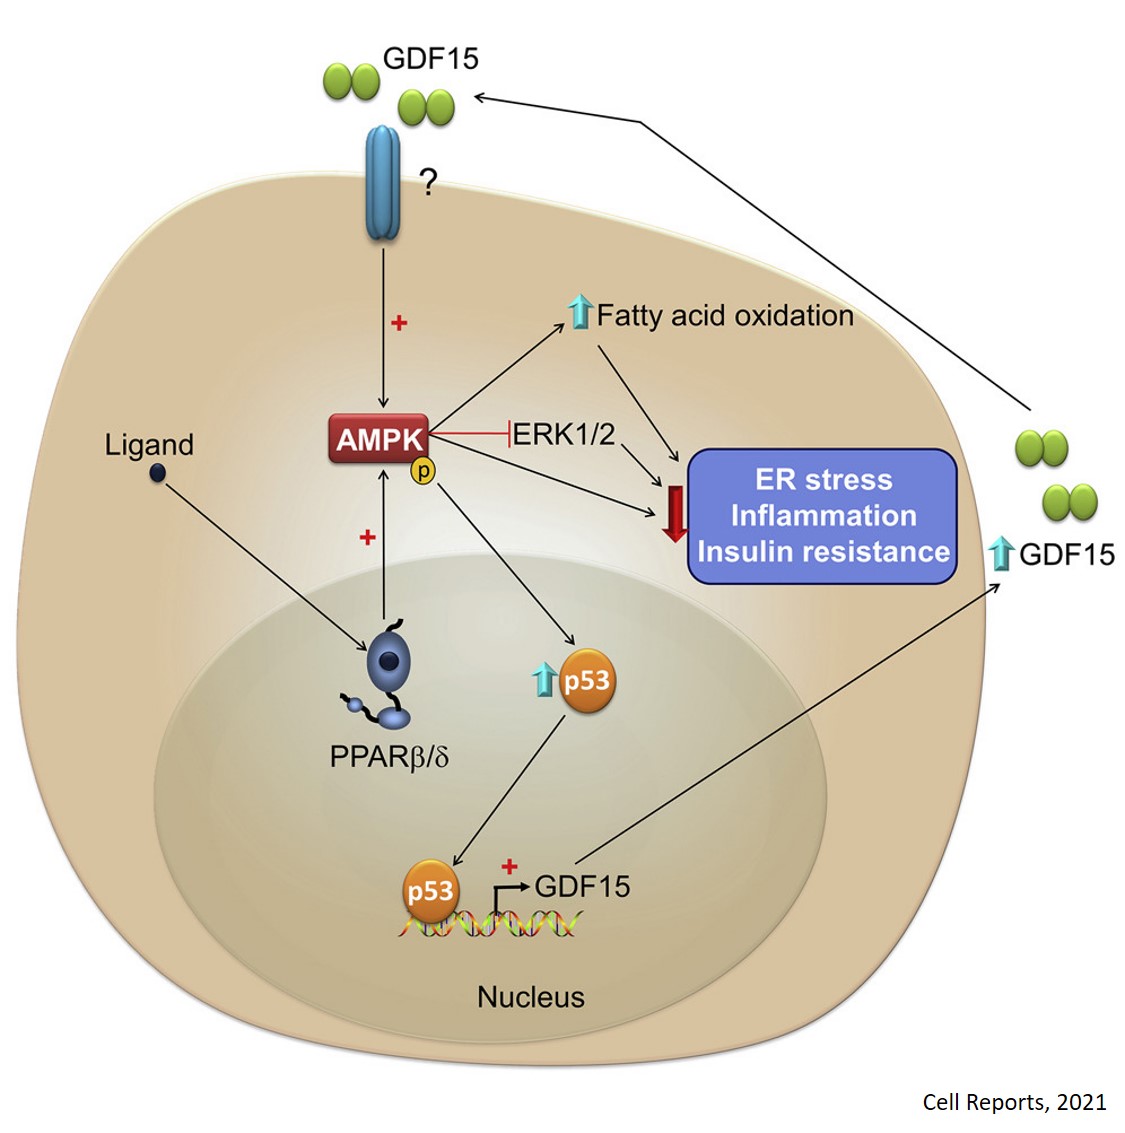 Energy metabolism in peripheral tissues regulated by a cytokine GDF15